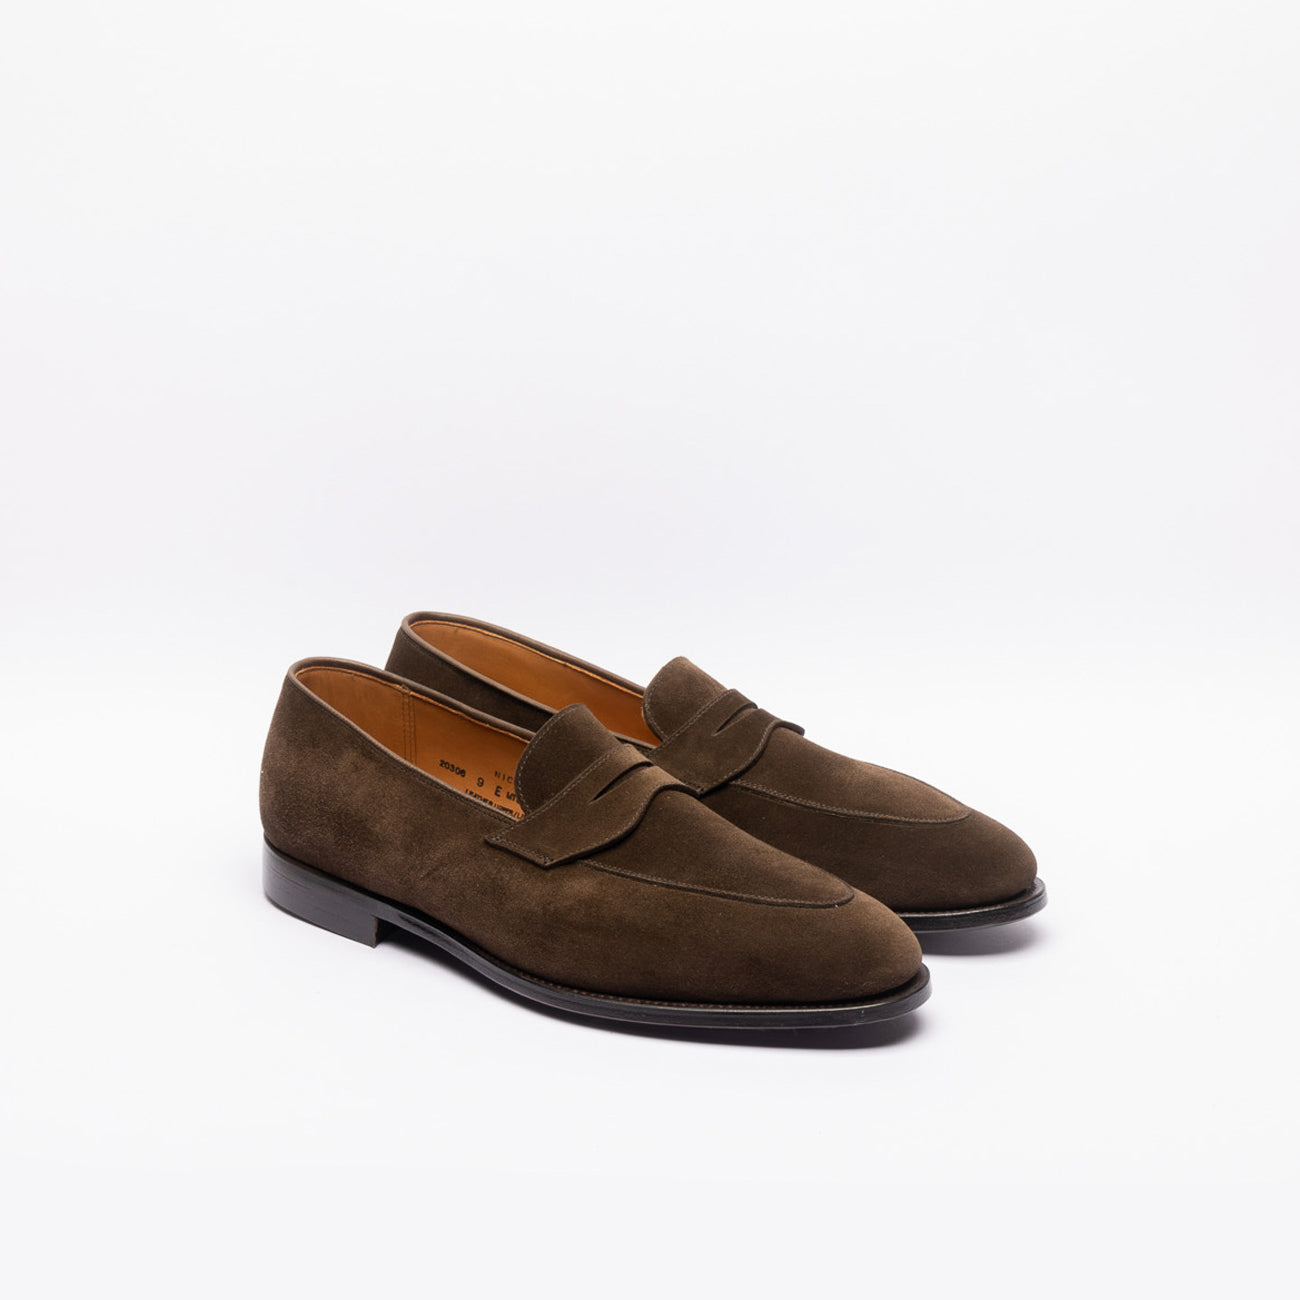 Crockett & Jones Nice penny loafers in brown suede